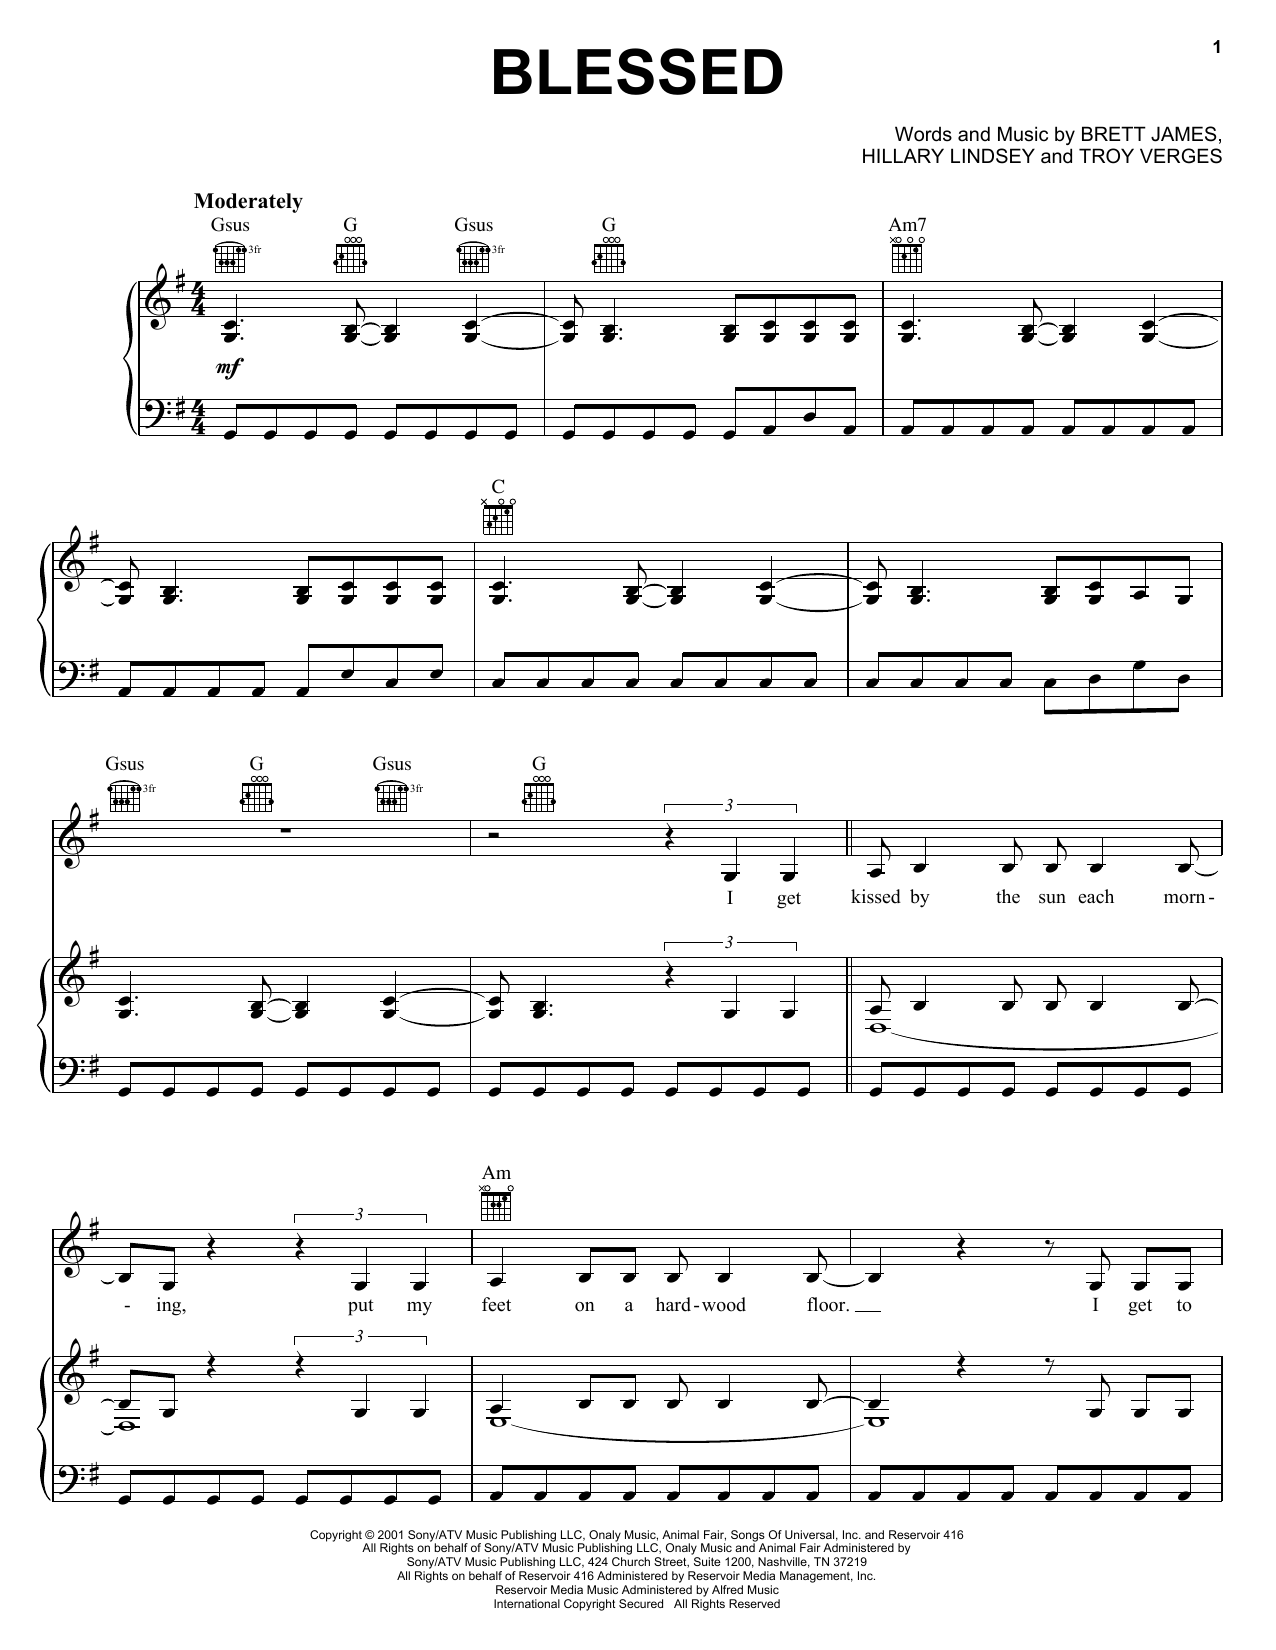 Martina McBride Blessed sheet music notes and chords arranged for Ukulele